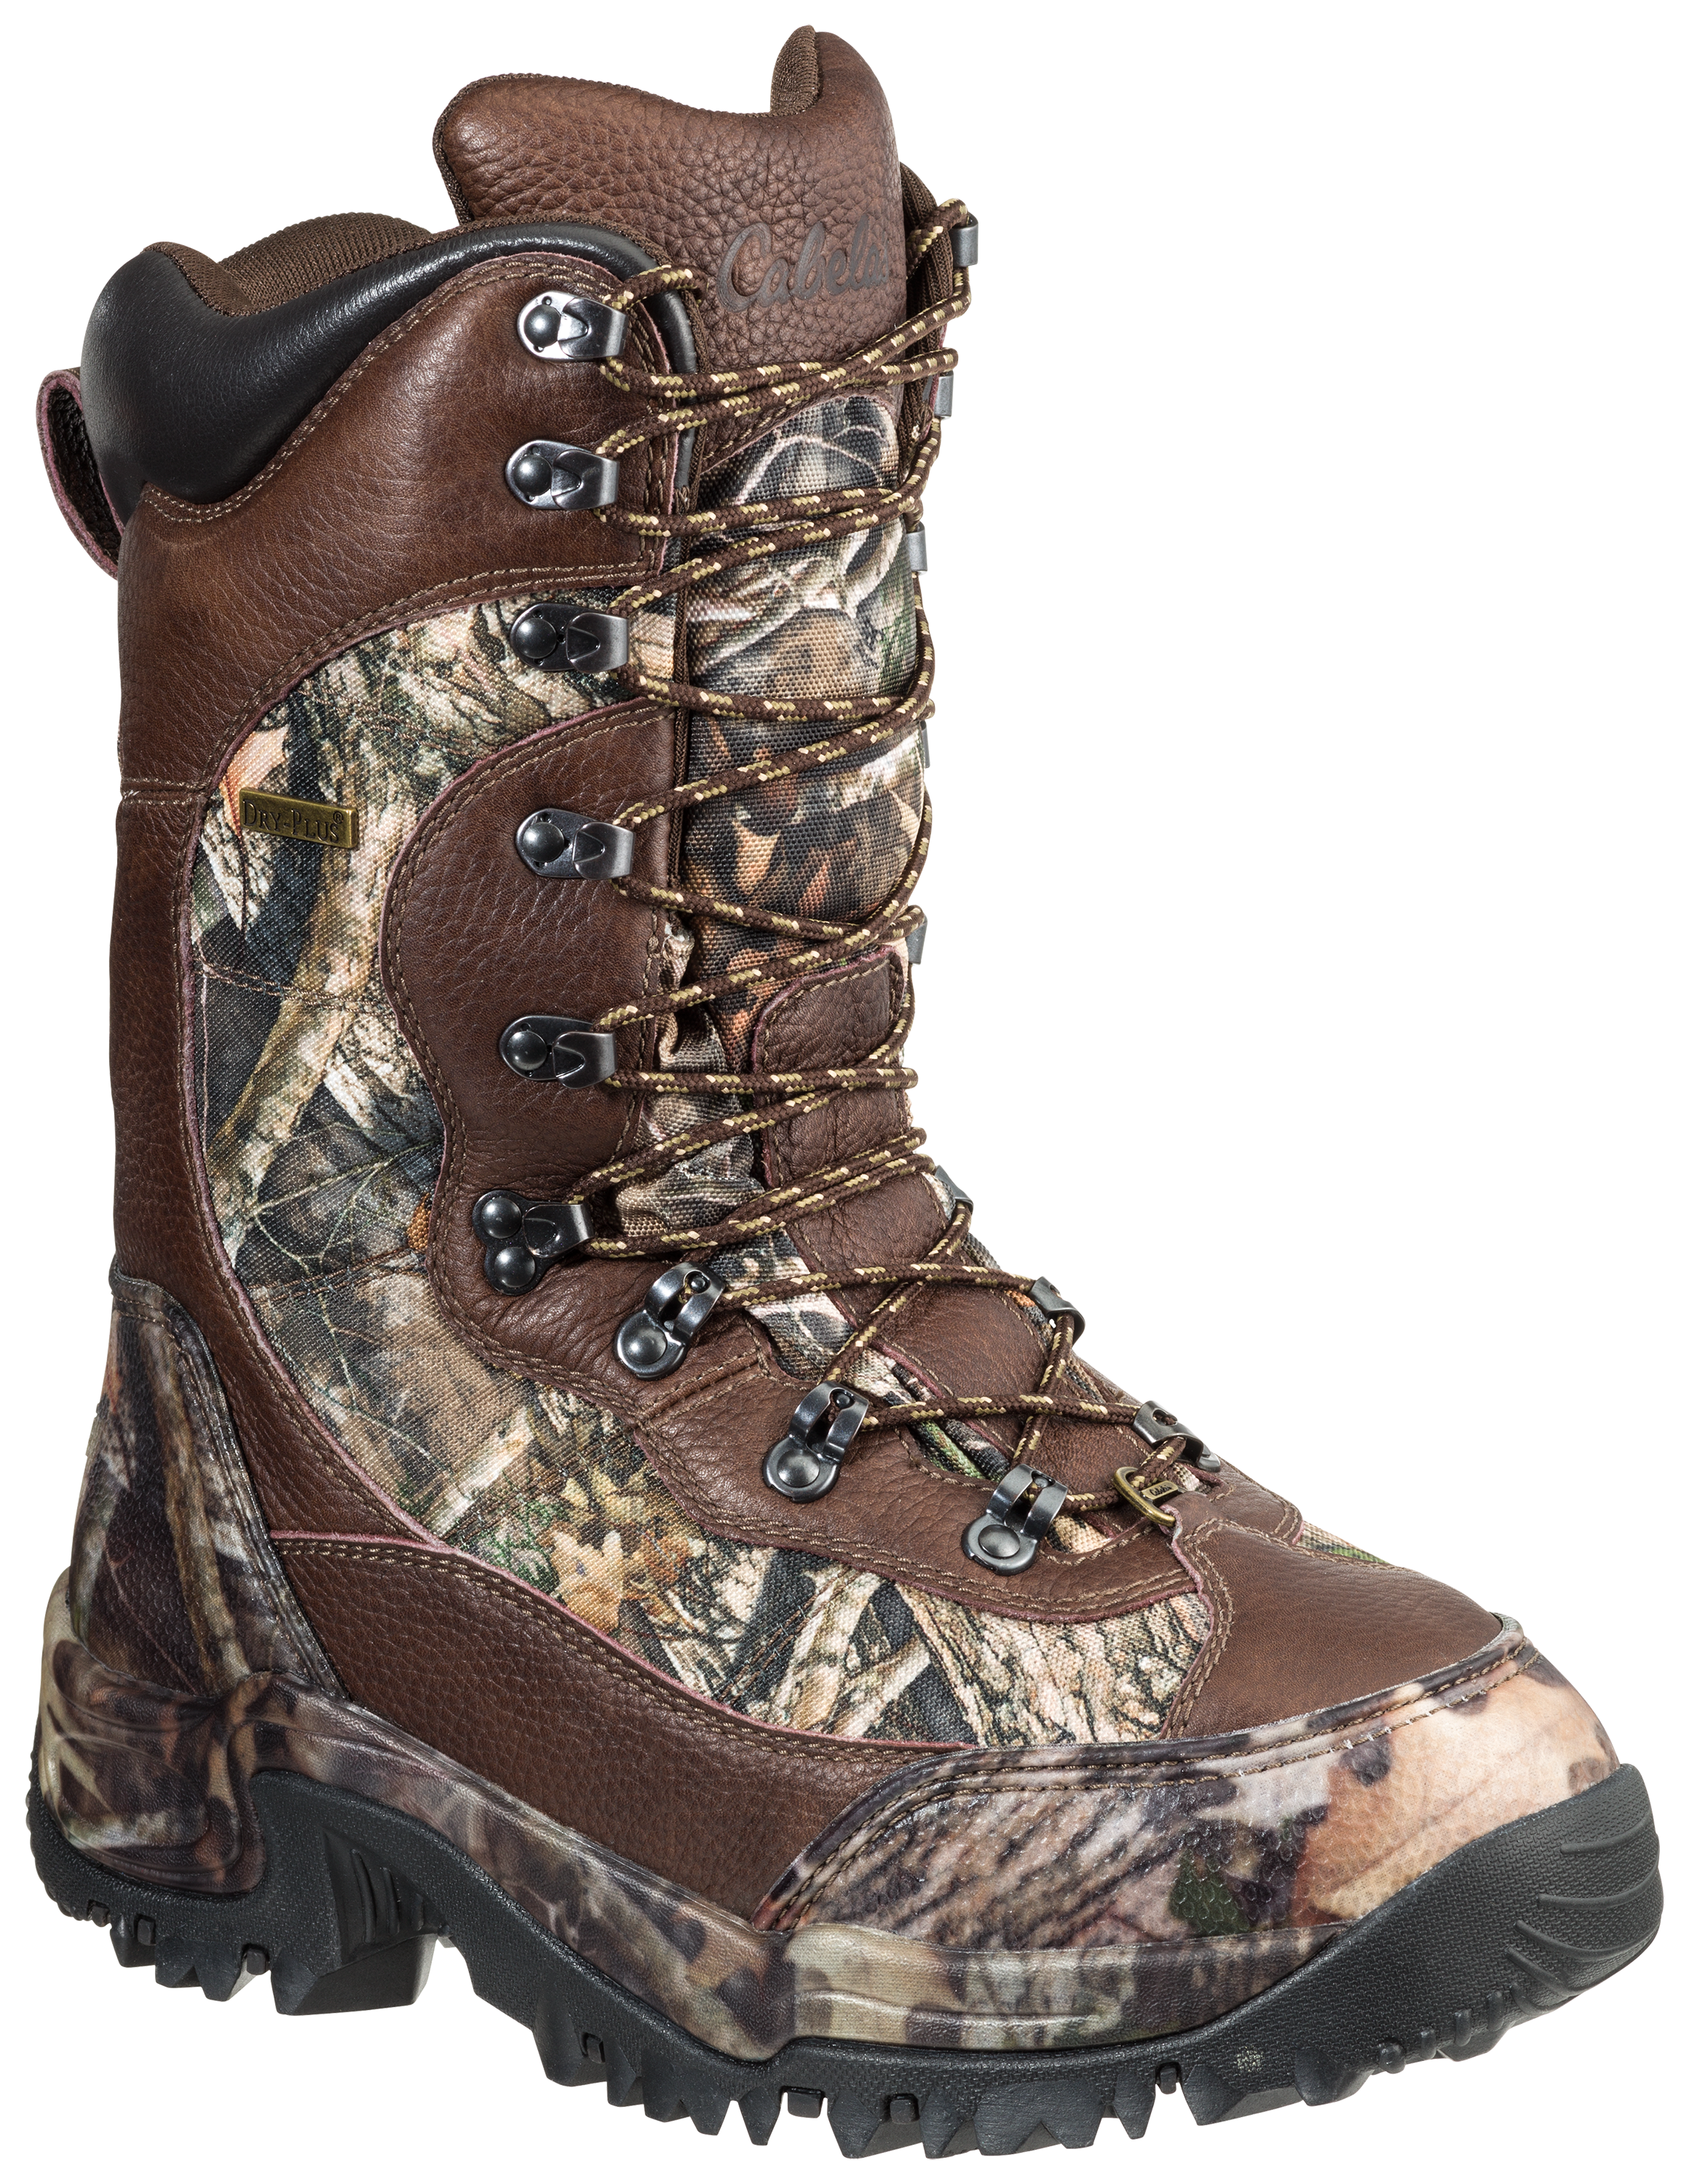 Cabela's Inferno Insulated Waterproof Hunting Boots for Men - Brown/TrueTimber Kanati - 12M